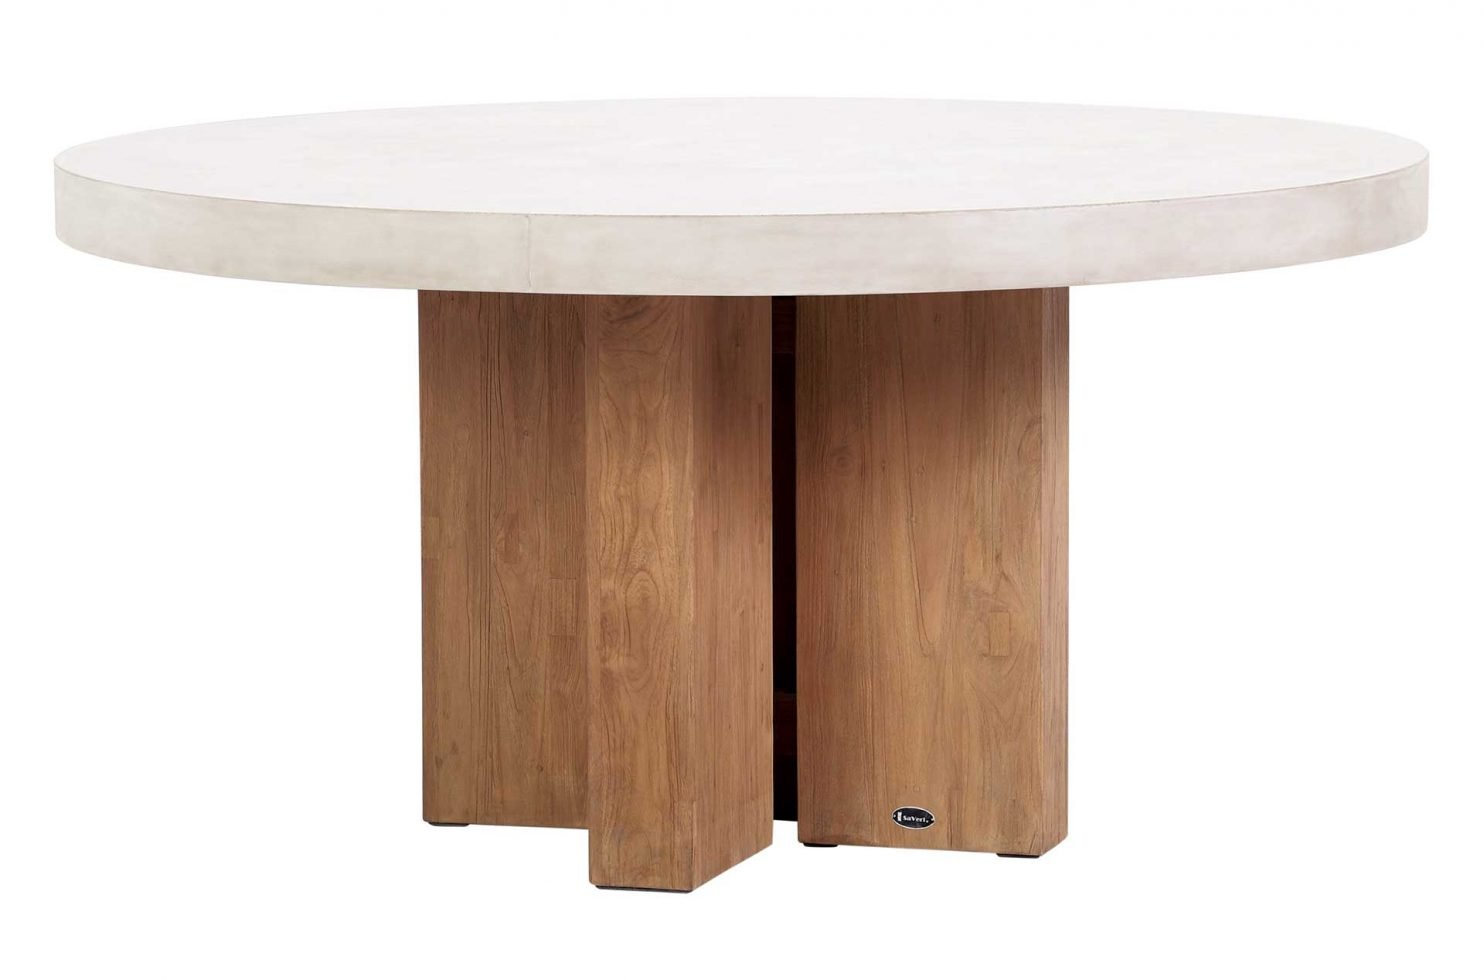 Seasonal Living Perpetual Concrete and Teak Java Round Dining Table â€“ Ivory White